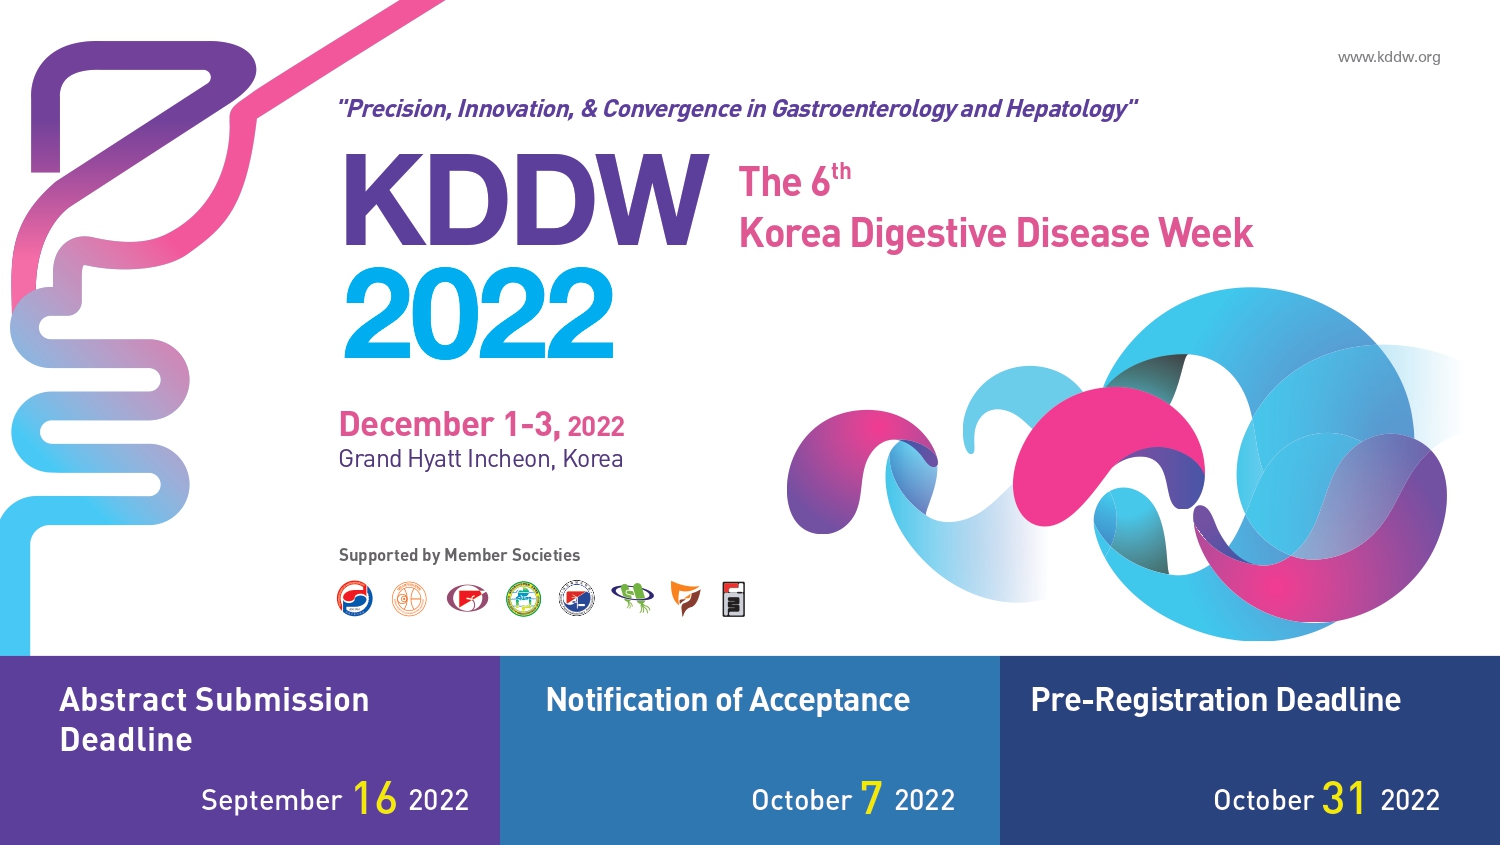 6th Korea Digestive Disease Week (KDDW 2022) will be held from December 1 to 3, 2022 at the Grand Hyatt Incheon in Korea.